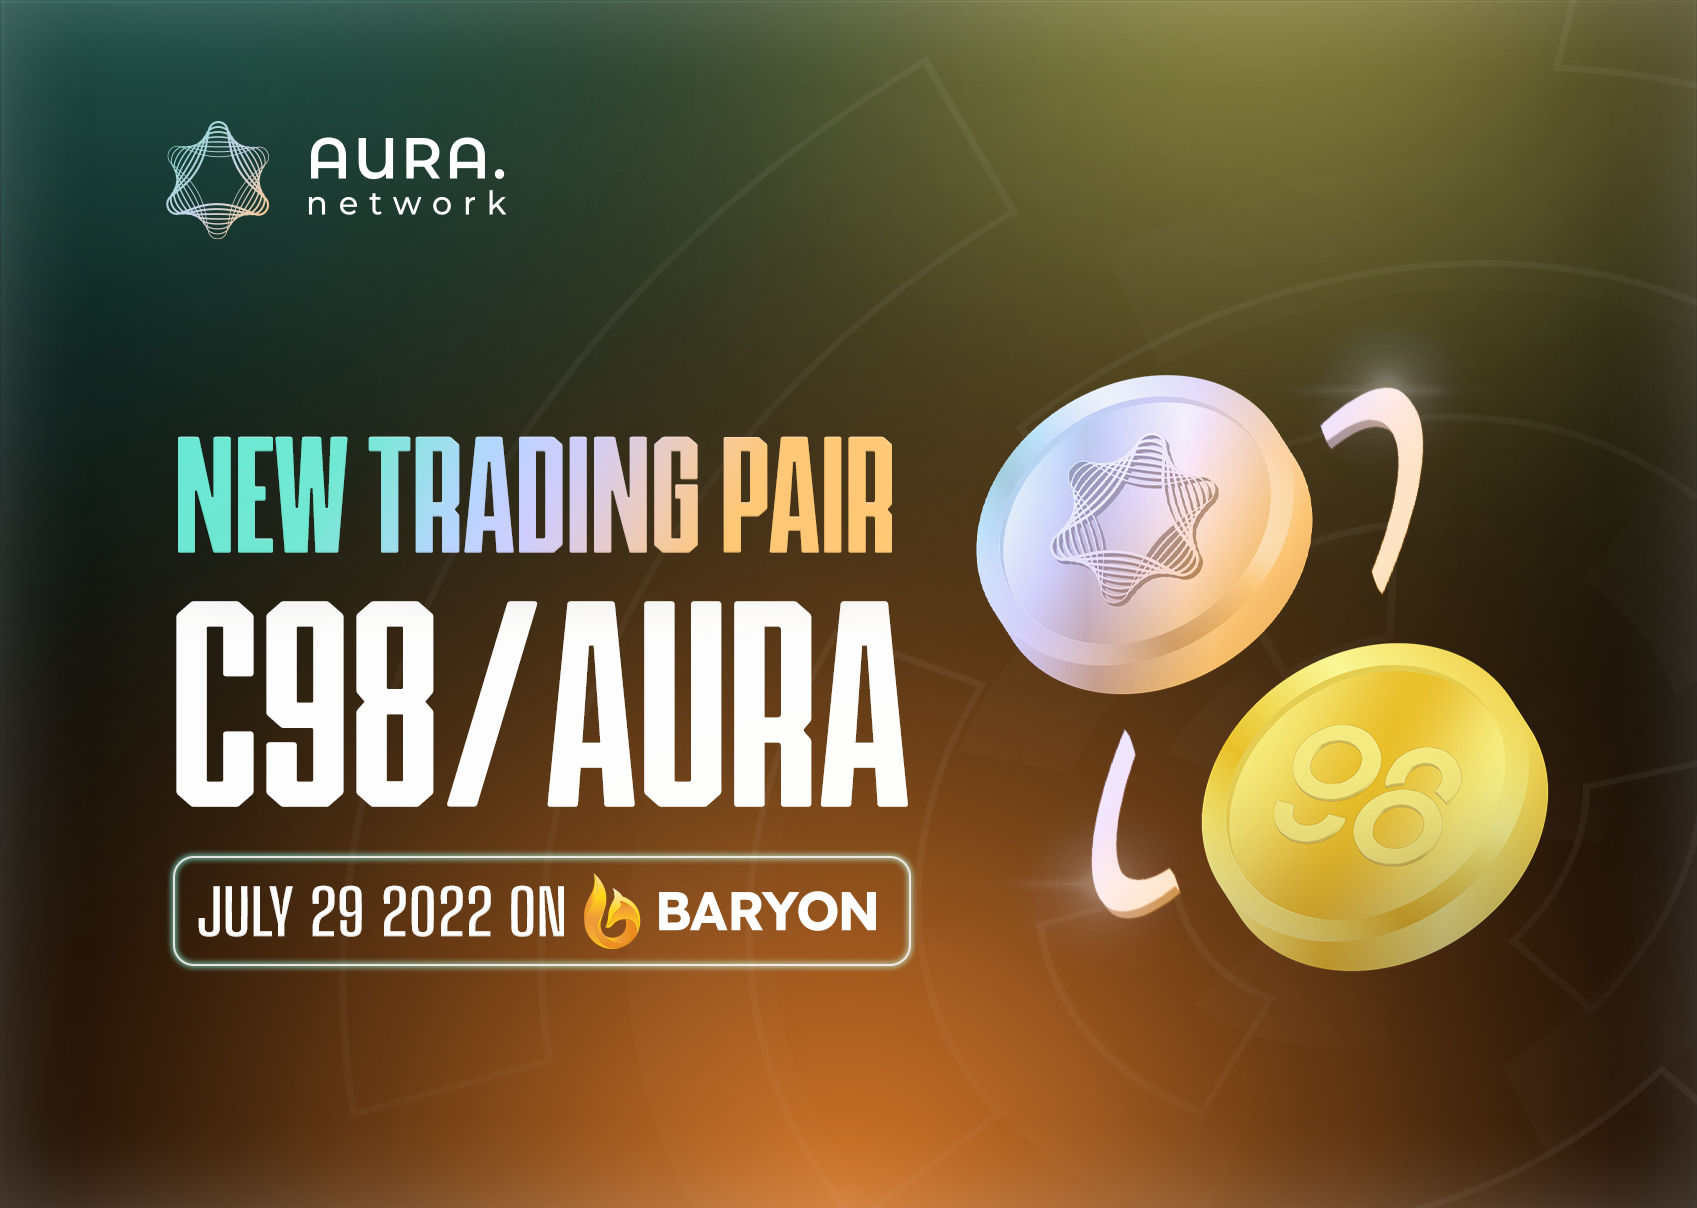 New Trading Pair: C98/AURA